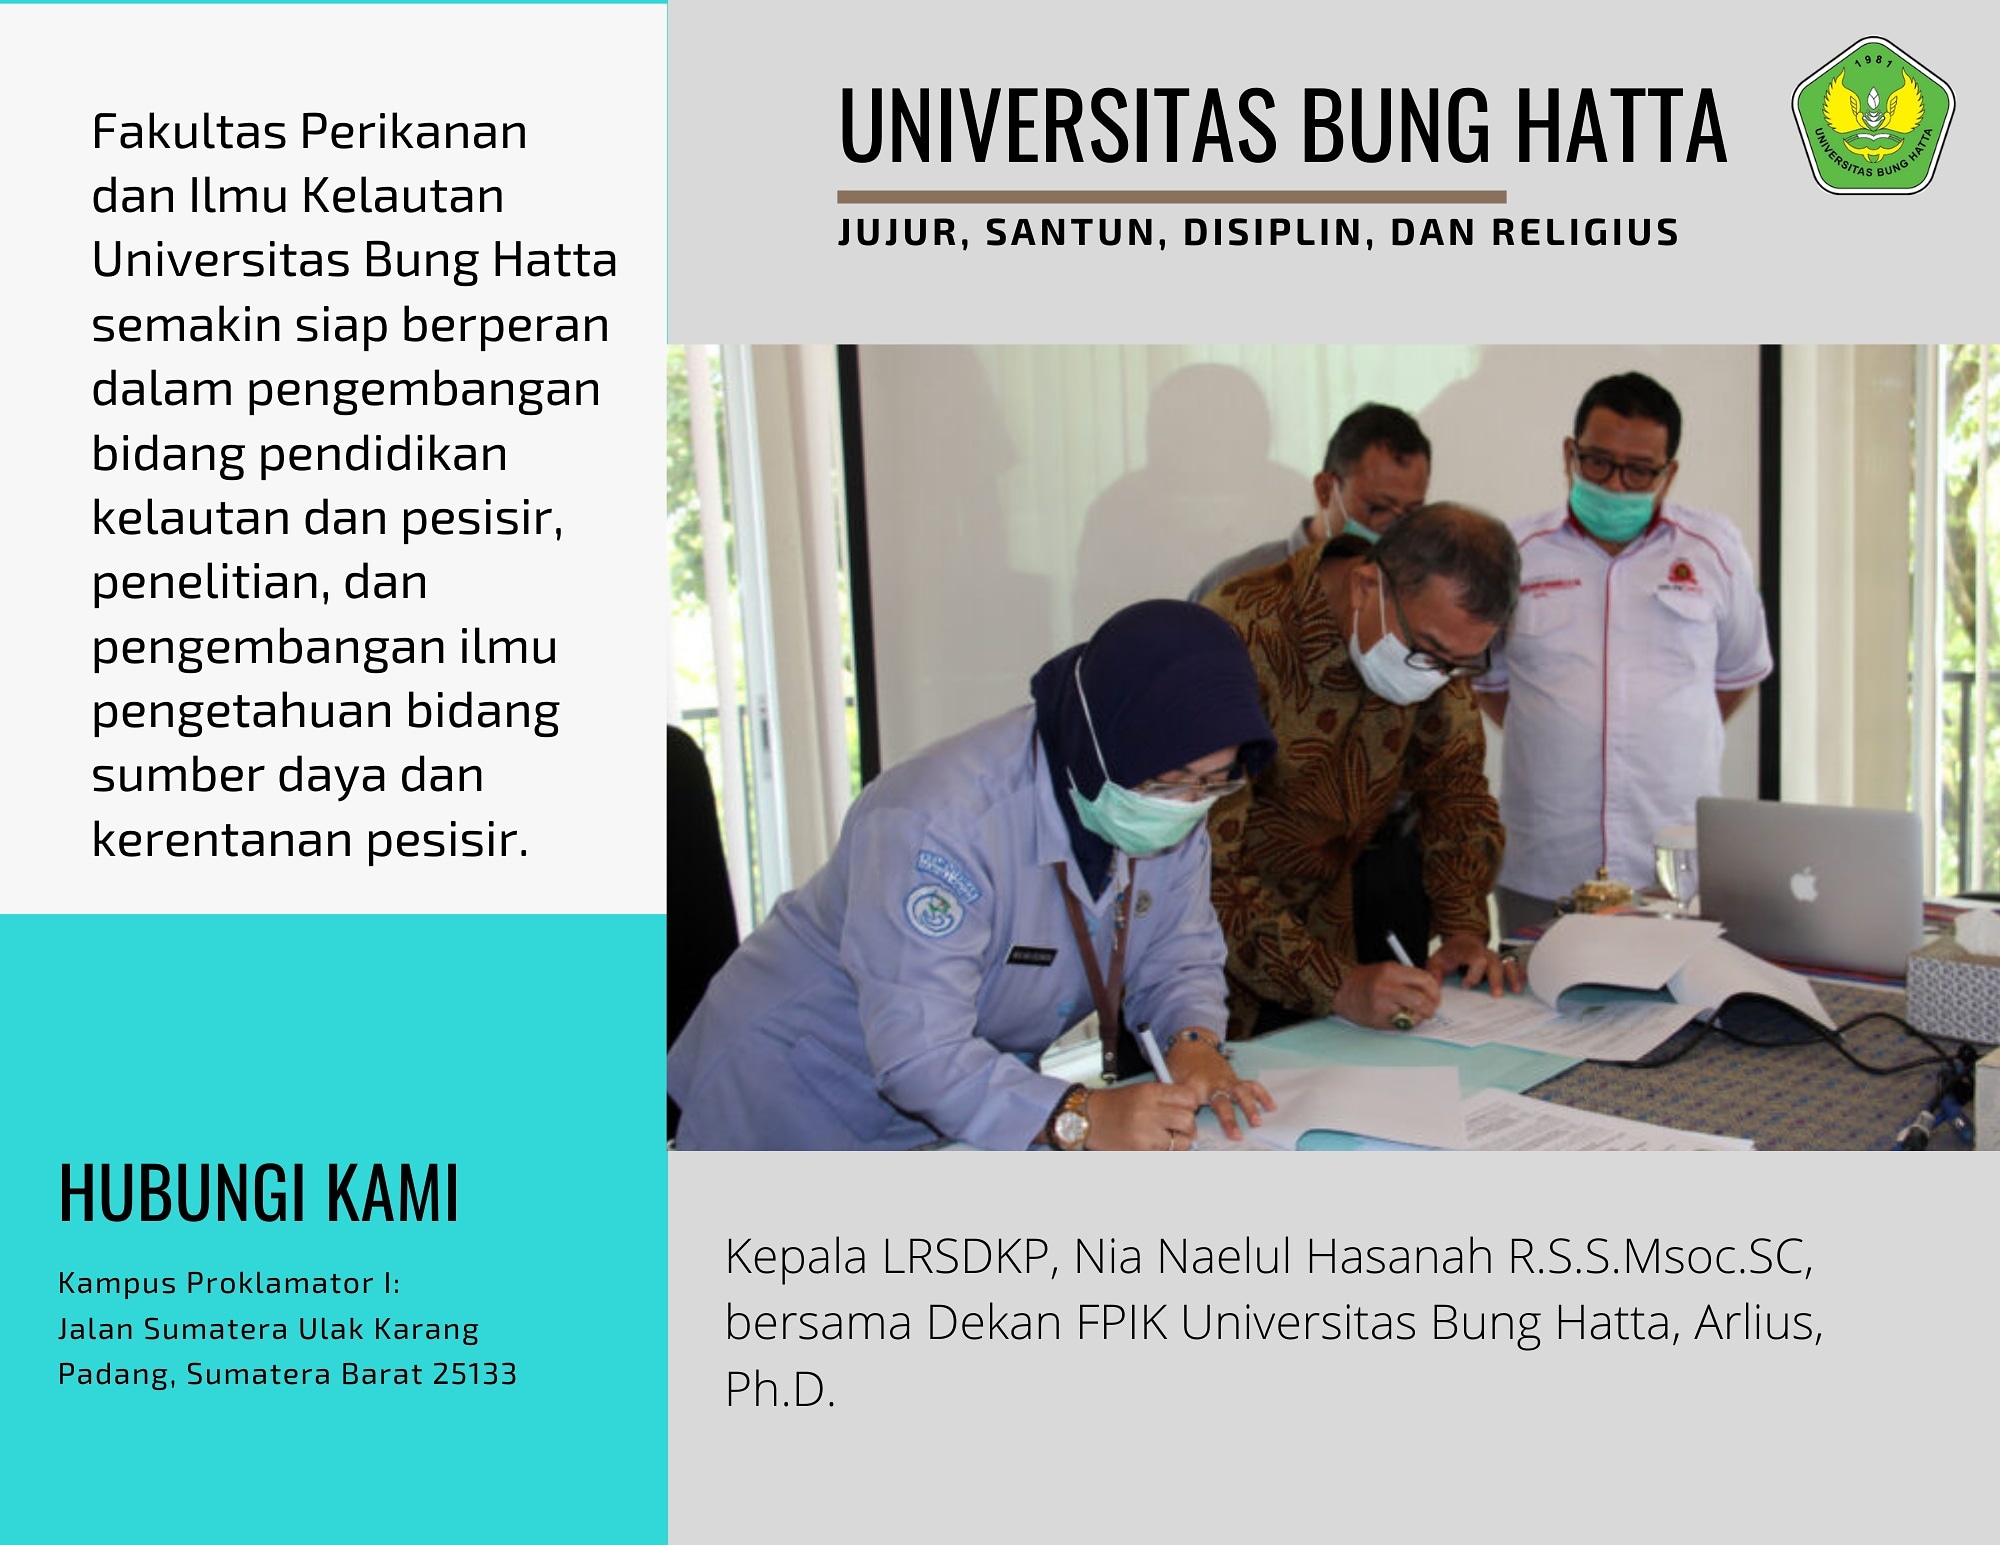 FPIK Universitas Bung Hatta Jalin Kerja Sama dengan Loka Riset Sumber Daya dan Kerentanan Pesisir (LRSDKP) Kementerian Kelautan dan Perikanan (KKP) 